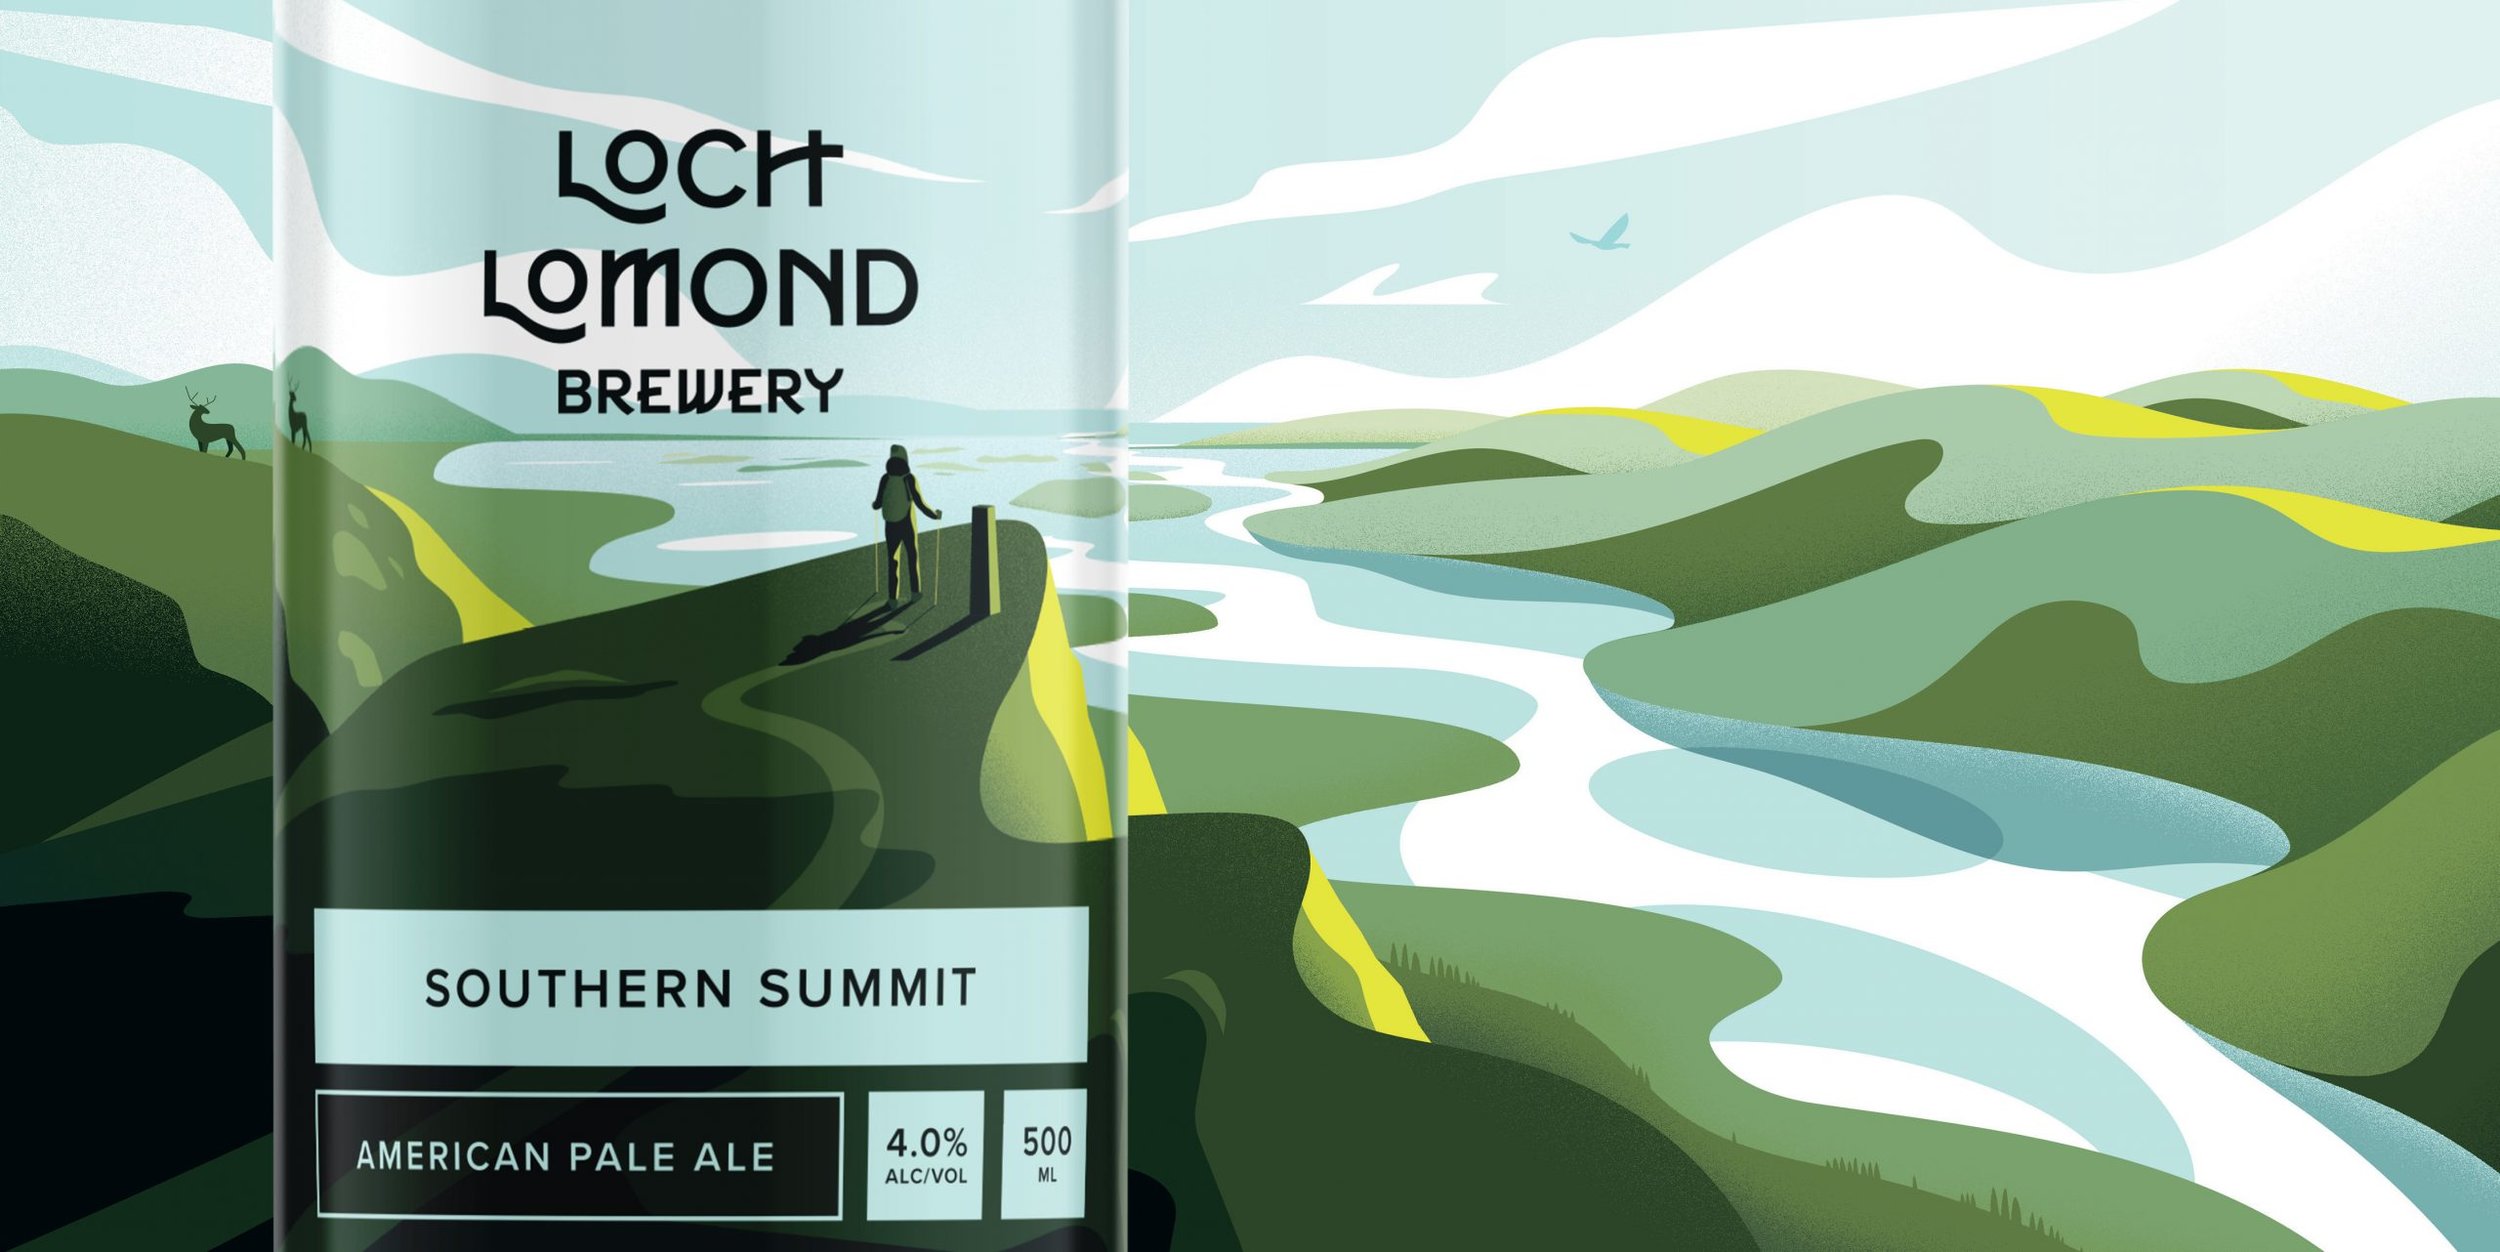 Beer & Branding: Loch Lomond